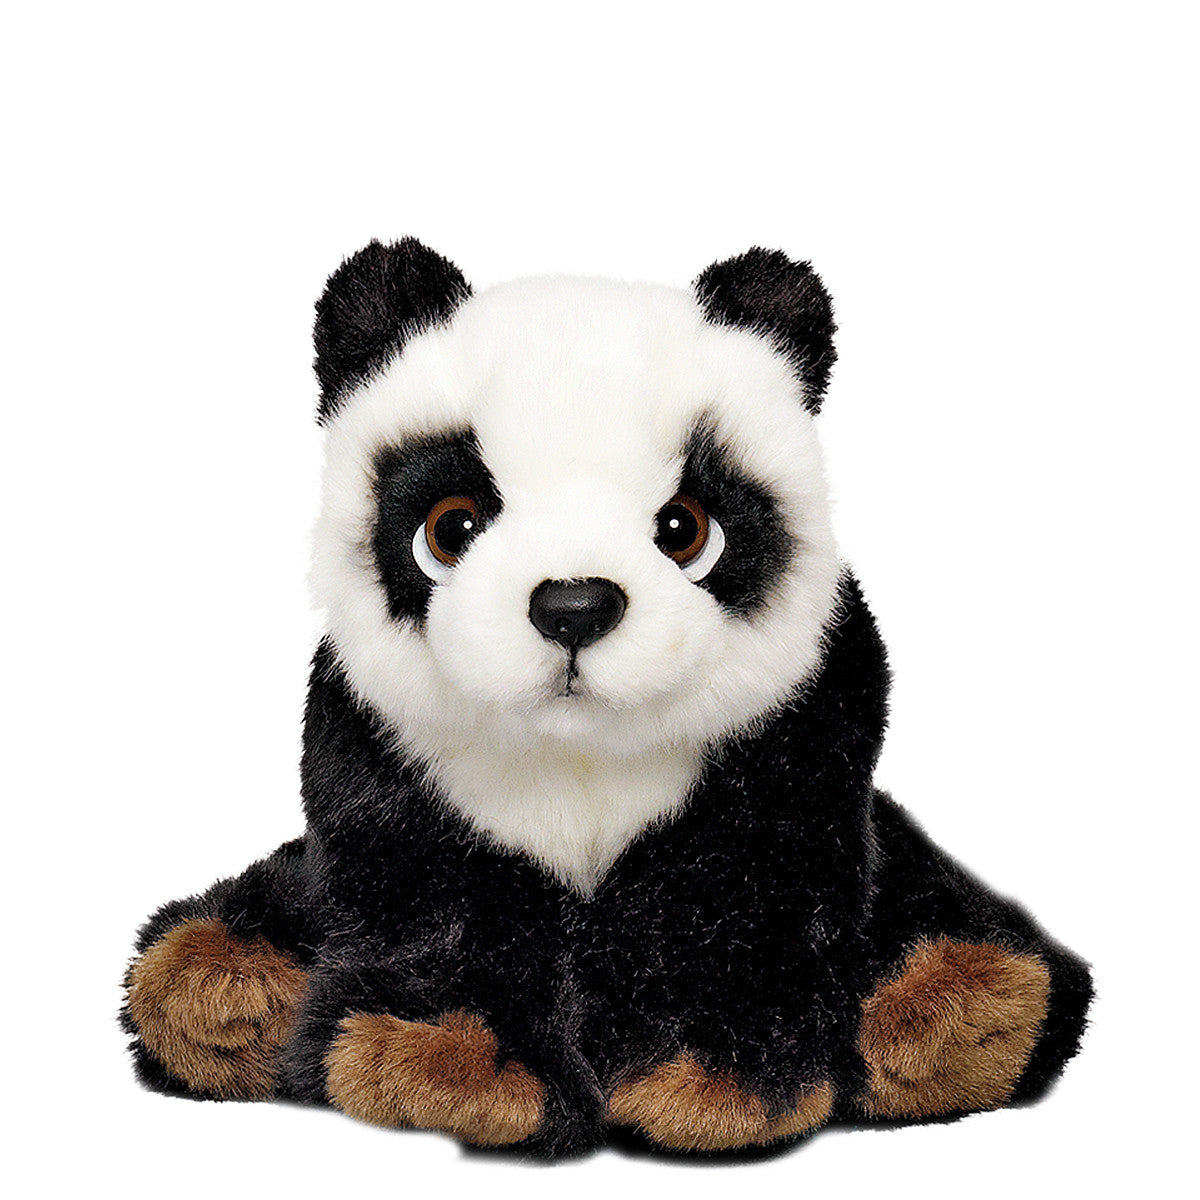 Giant panda - WWF-Canada